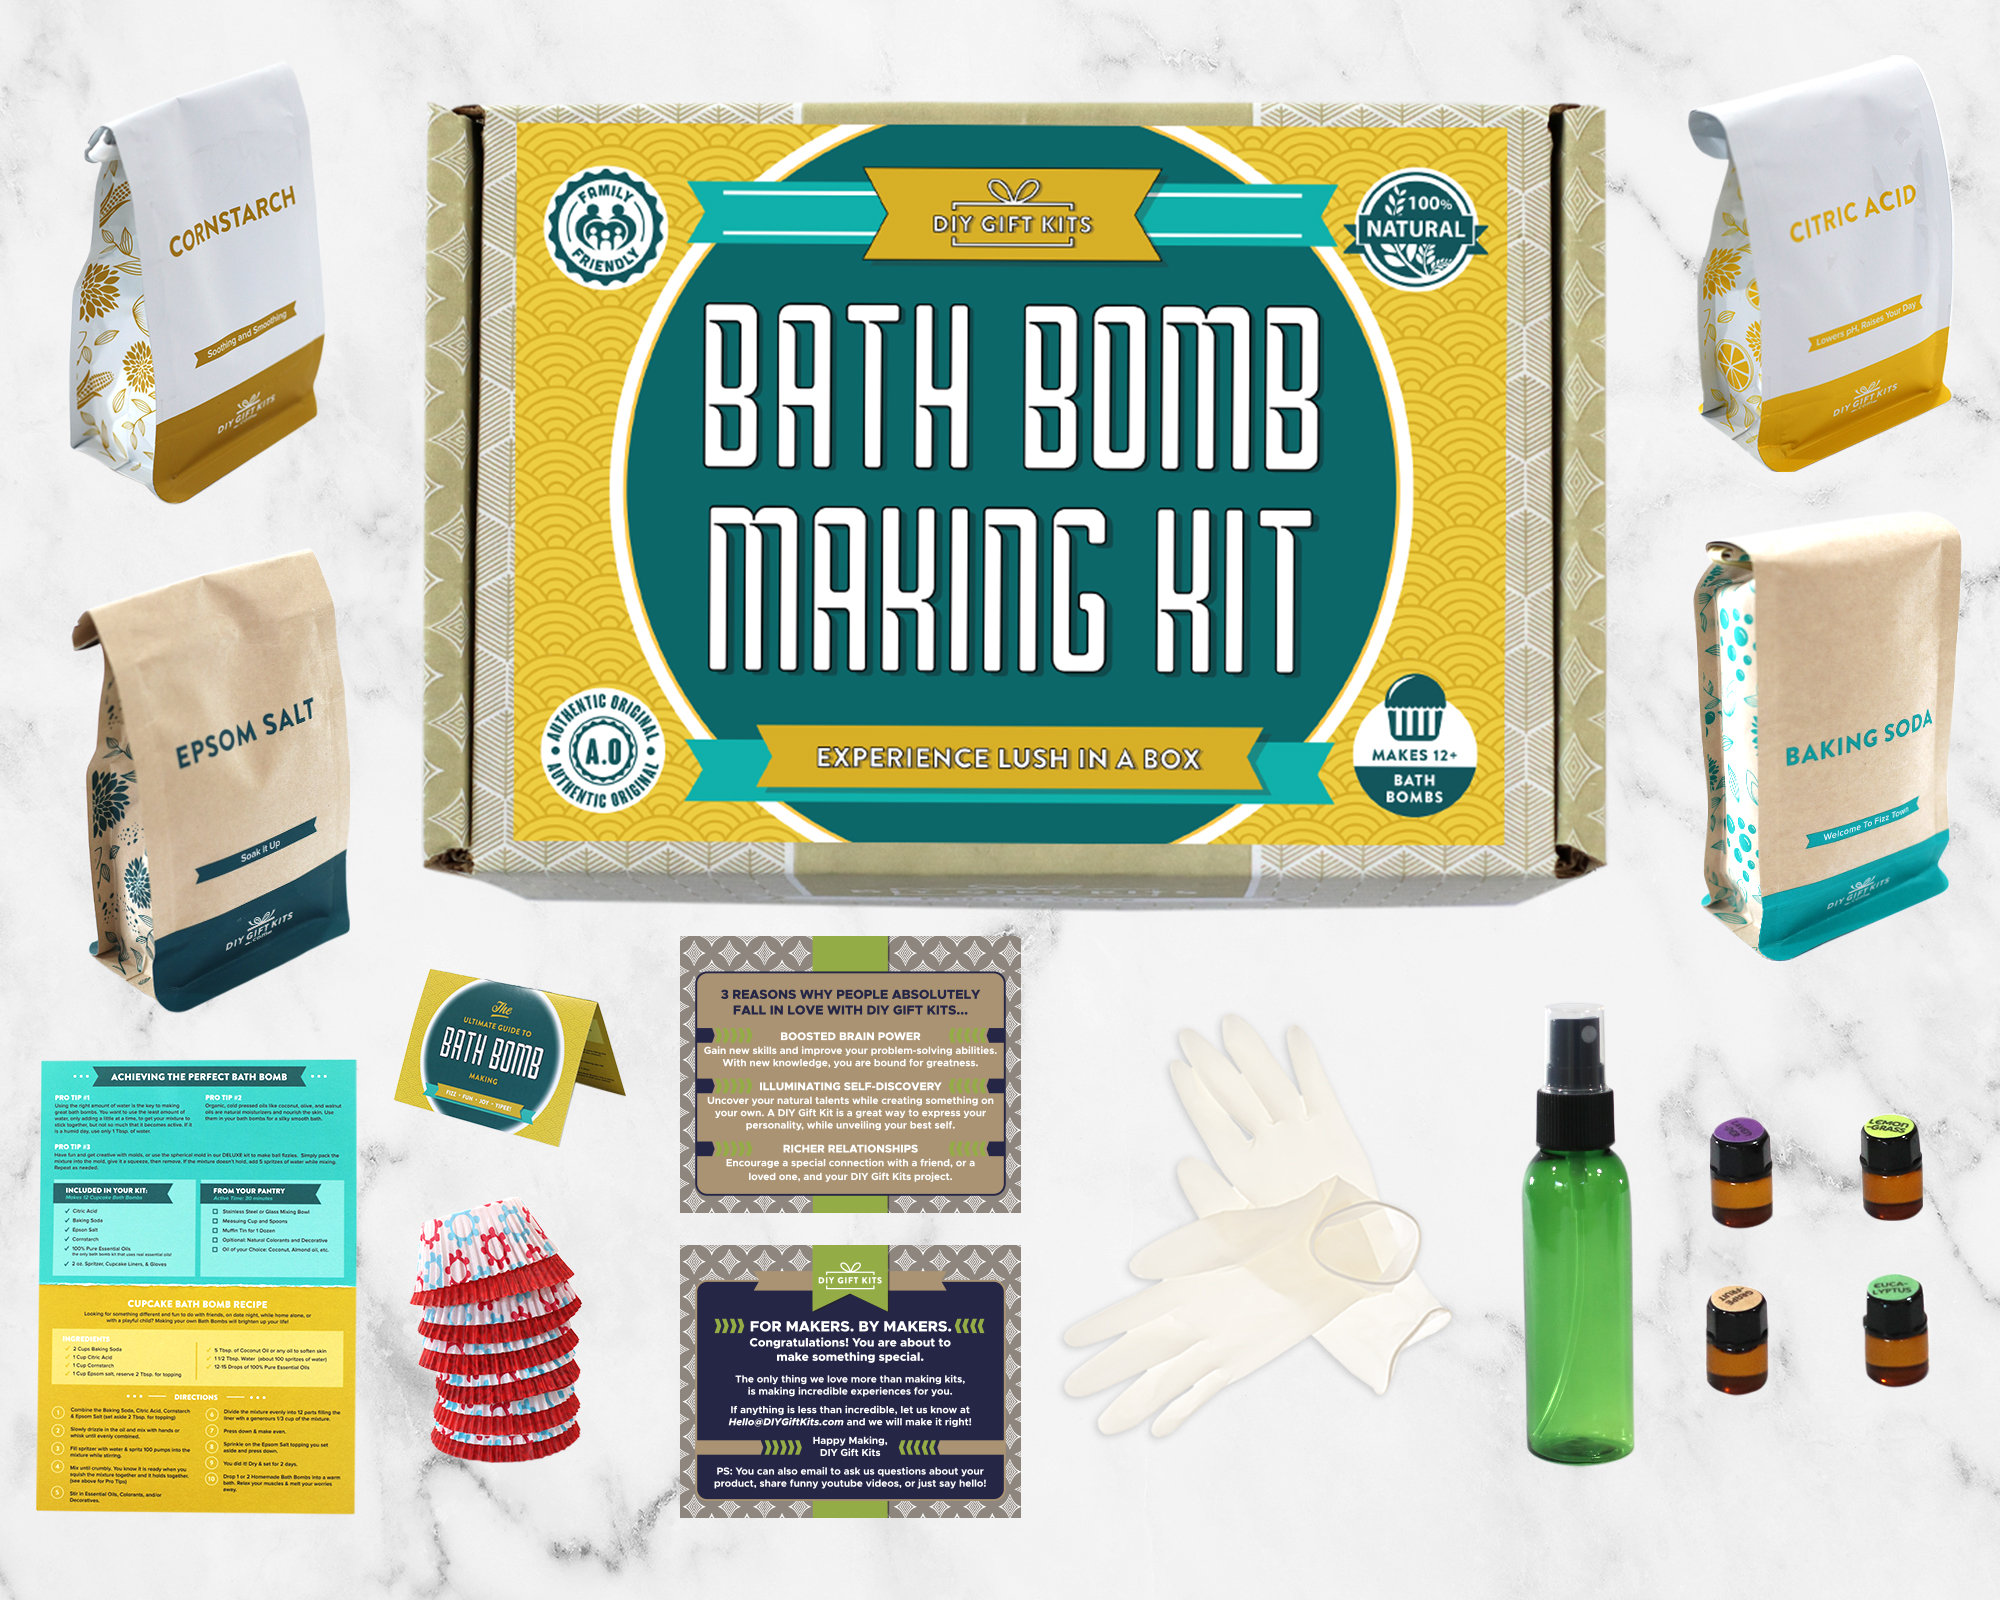 SOAP AND BATH BOMB MAKING KIT FOR KIDS — Dan&Darci